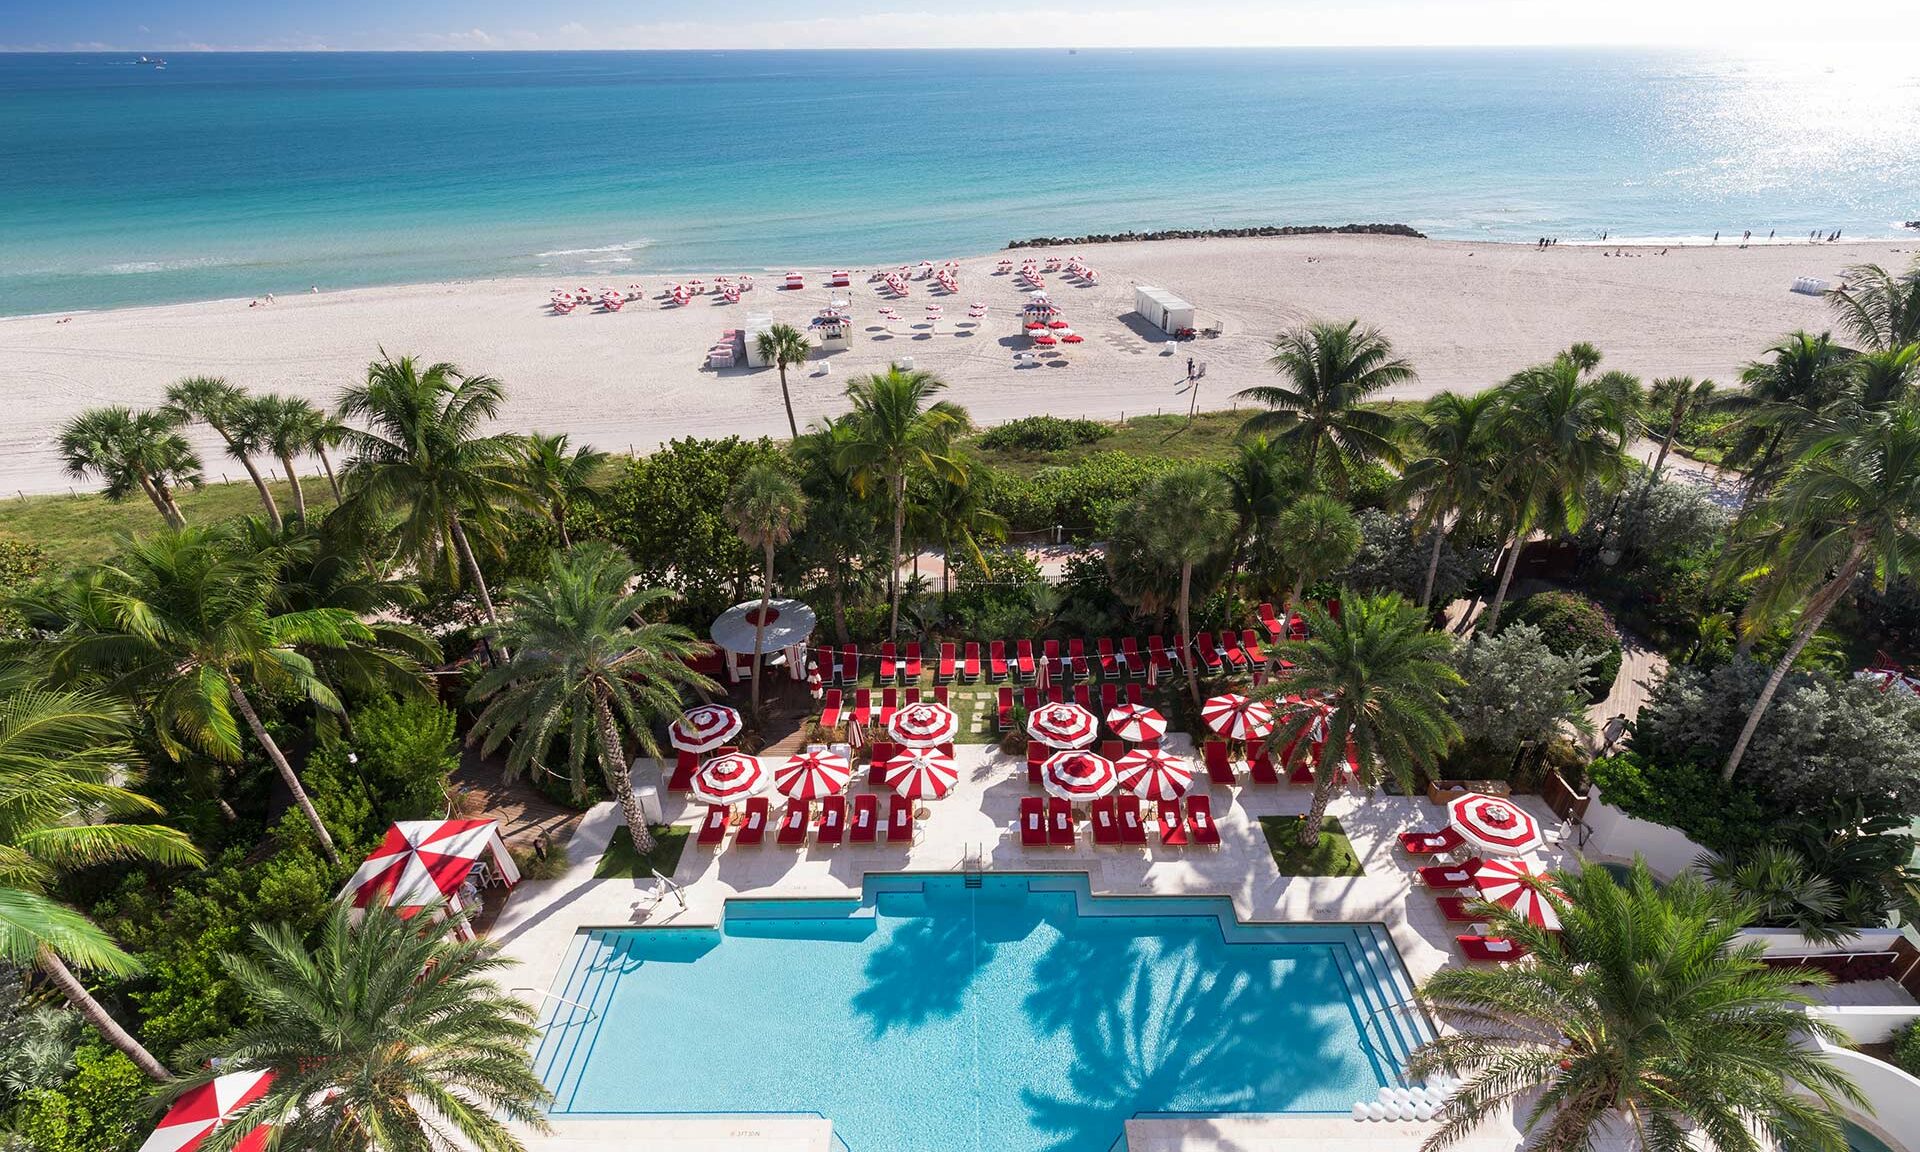 Faena Hotel Miami Beach Florida